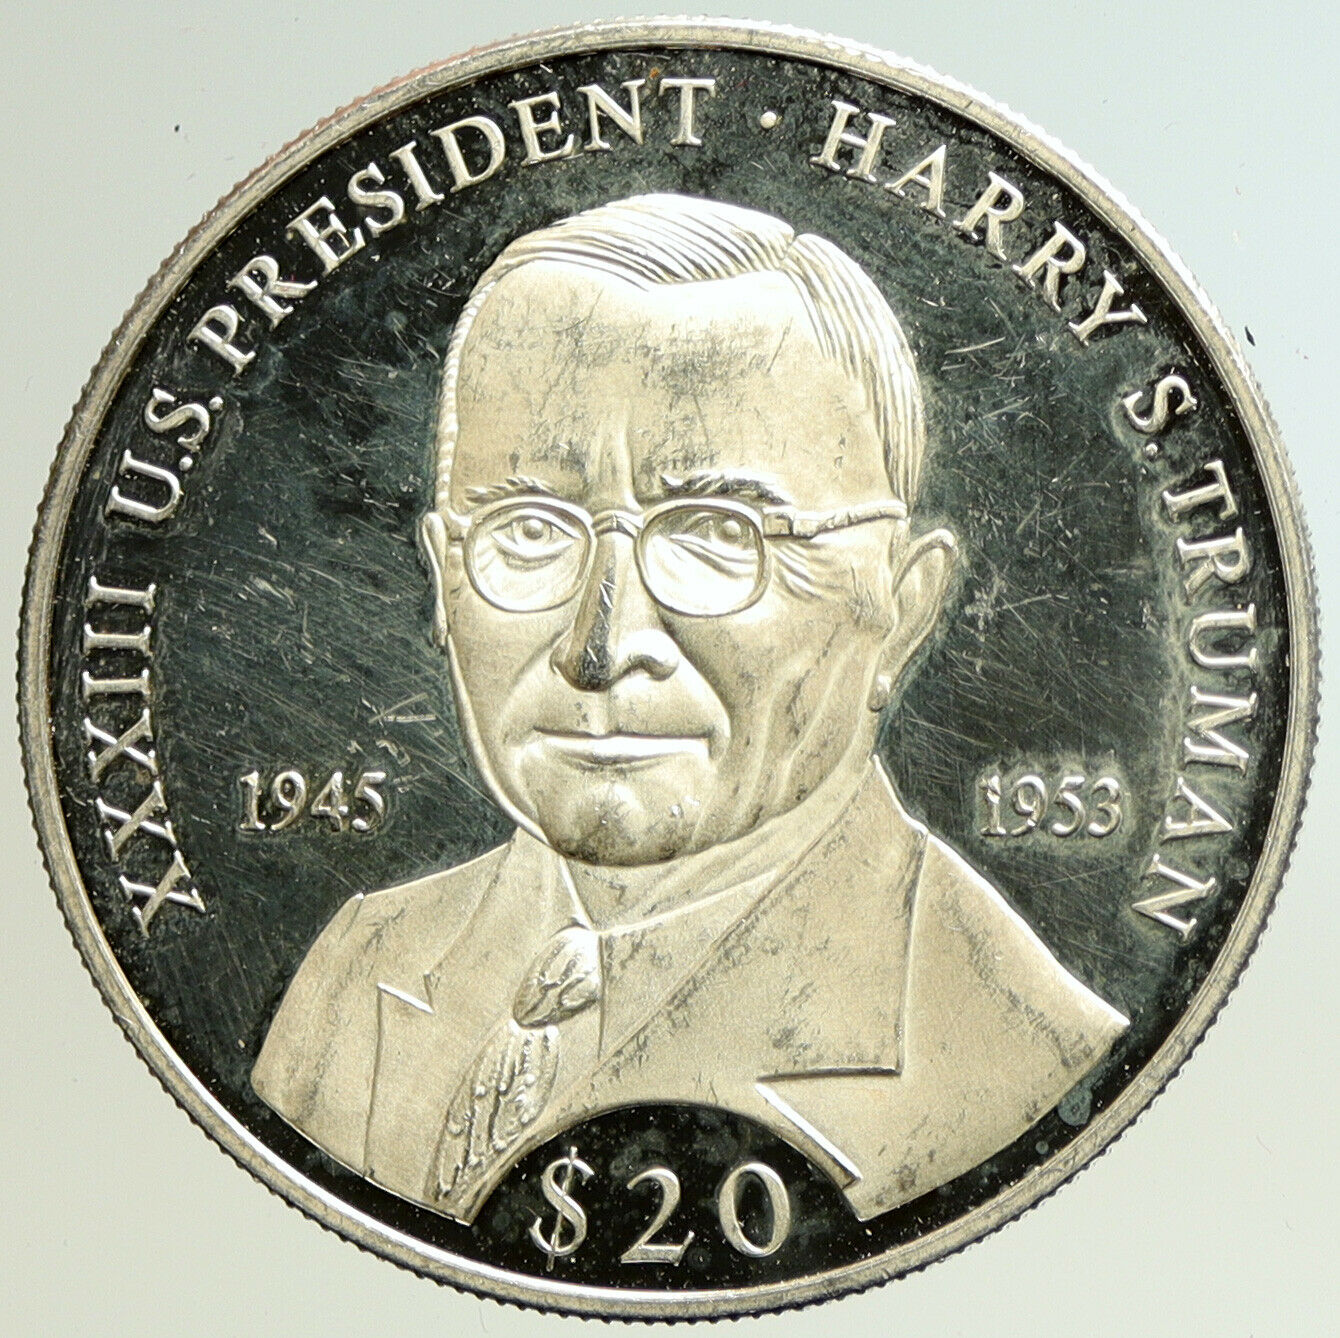 2000 LIBERIA USA President HARRY TRUMAN Proof Silver 20 Dollar Coin i104939